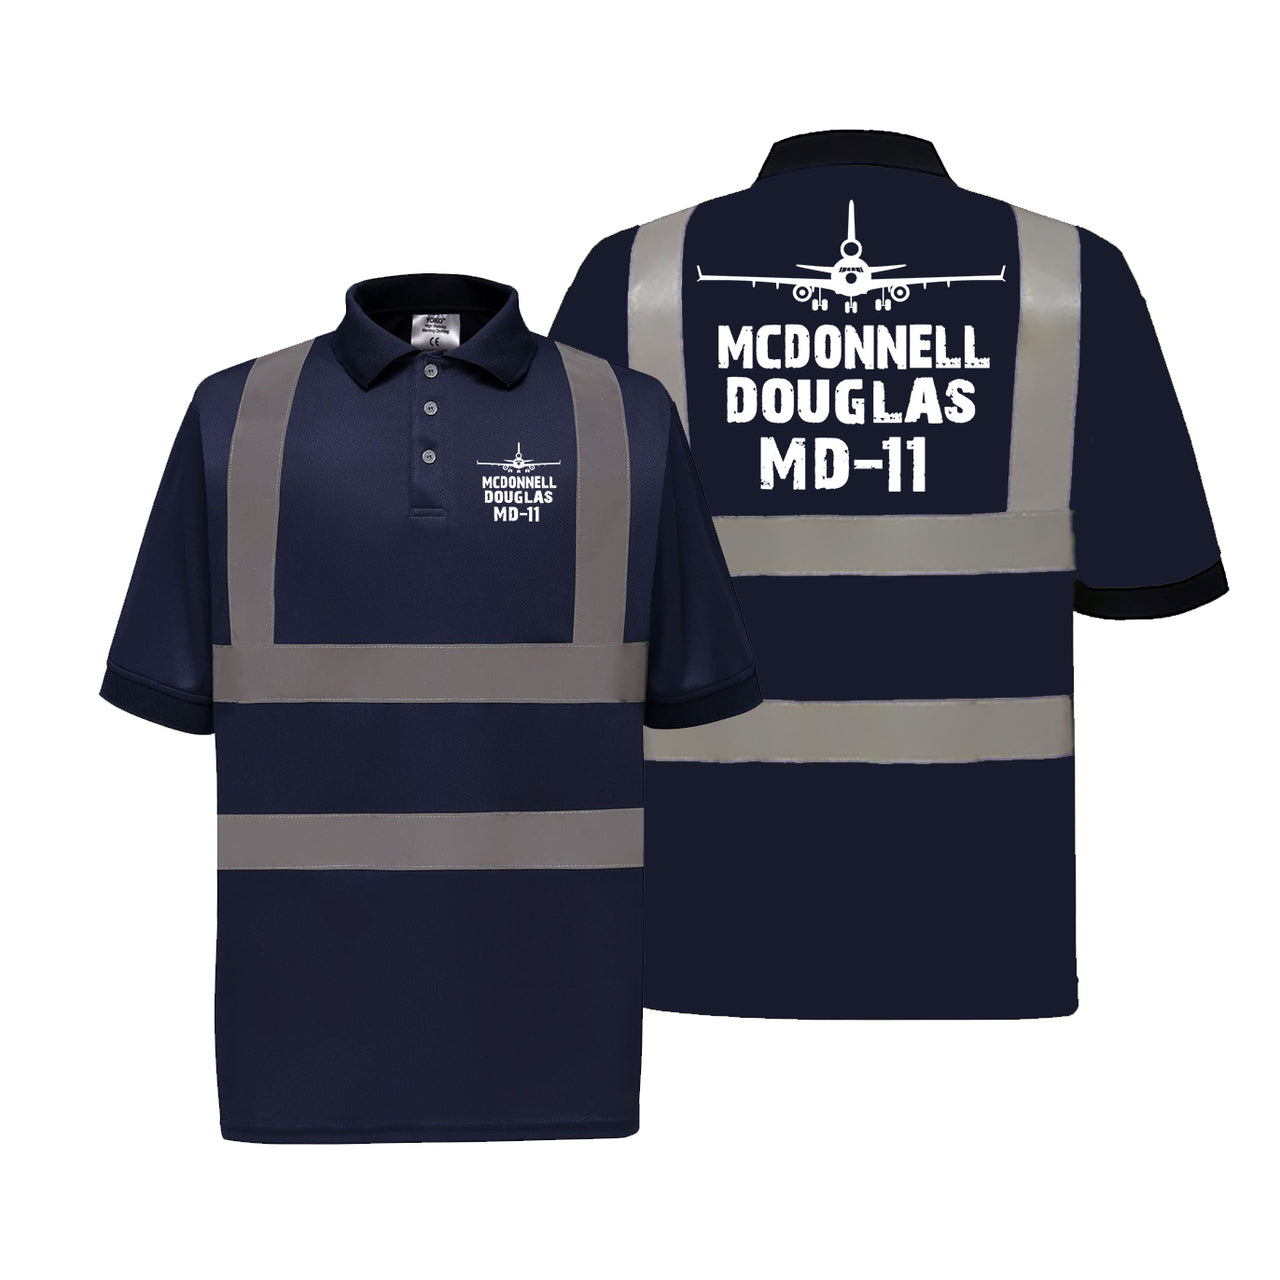 McDonnell Douglas MD-11 & Plane Designed Reflective Polo T-Shirts